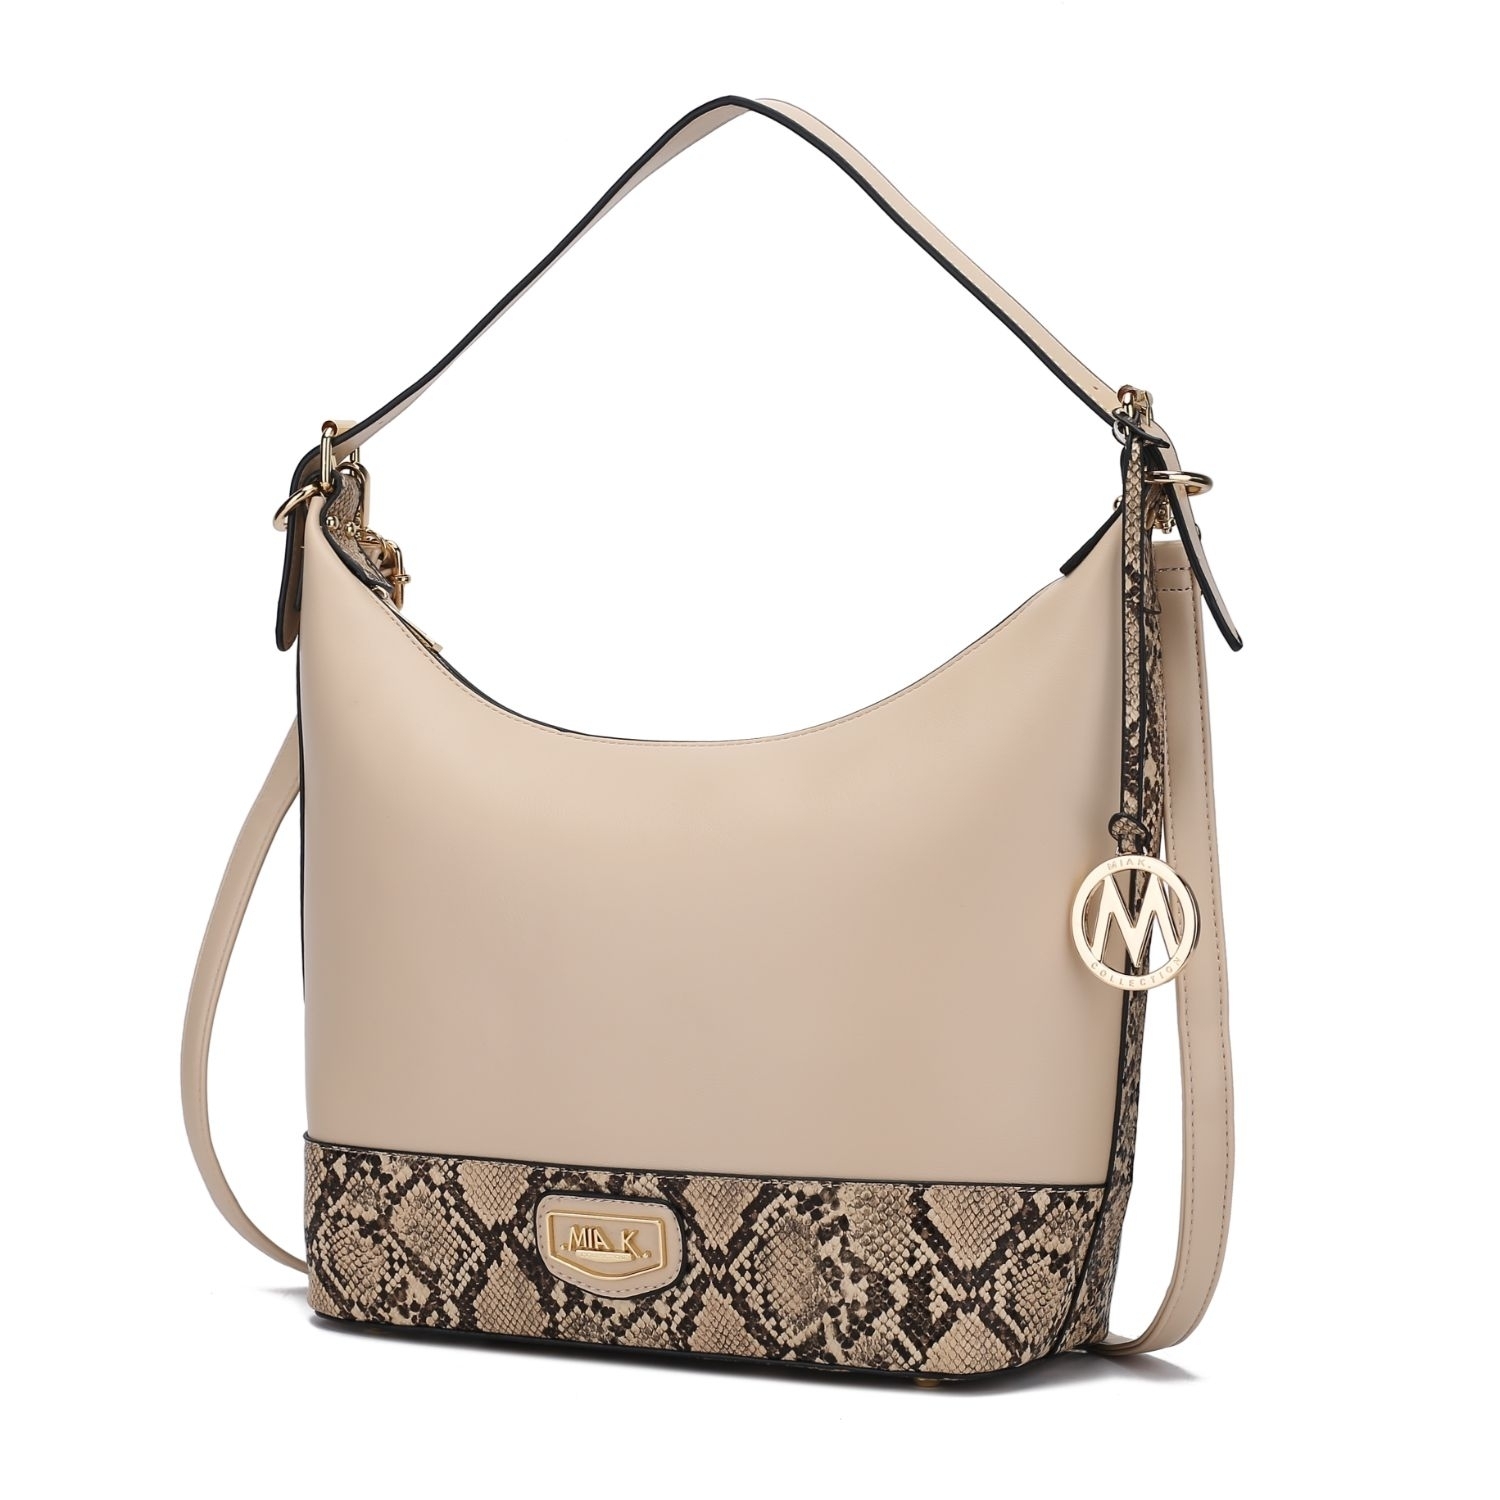 MKF Collection Diana Shoulder Handbag By Mia K. - Beige